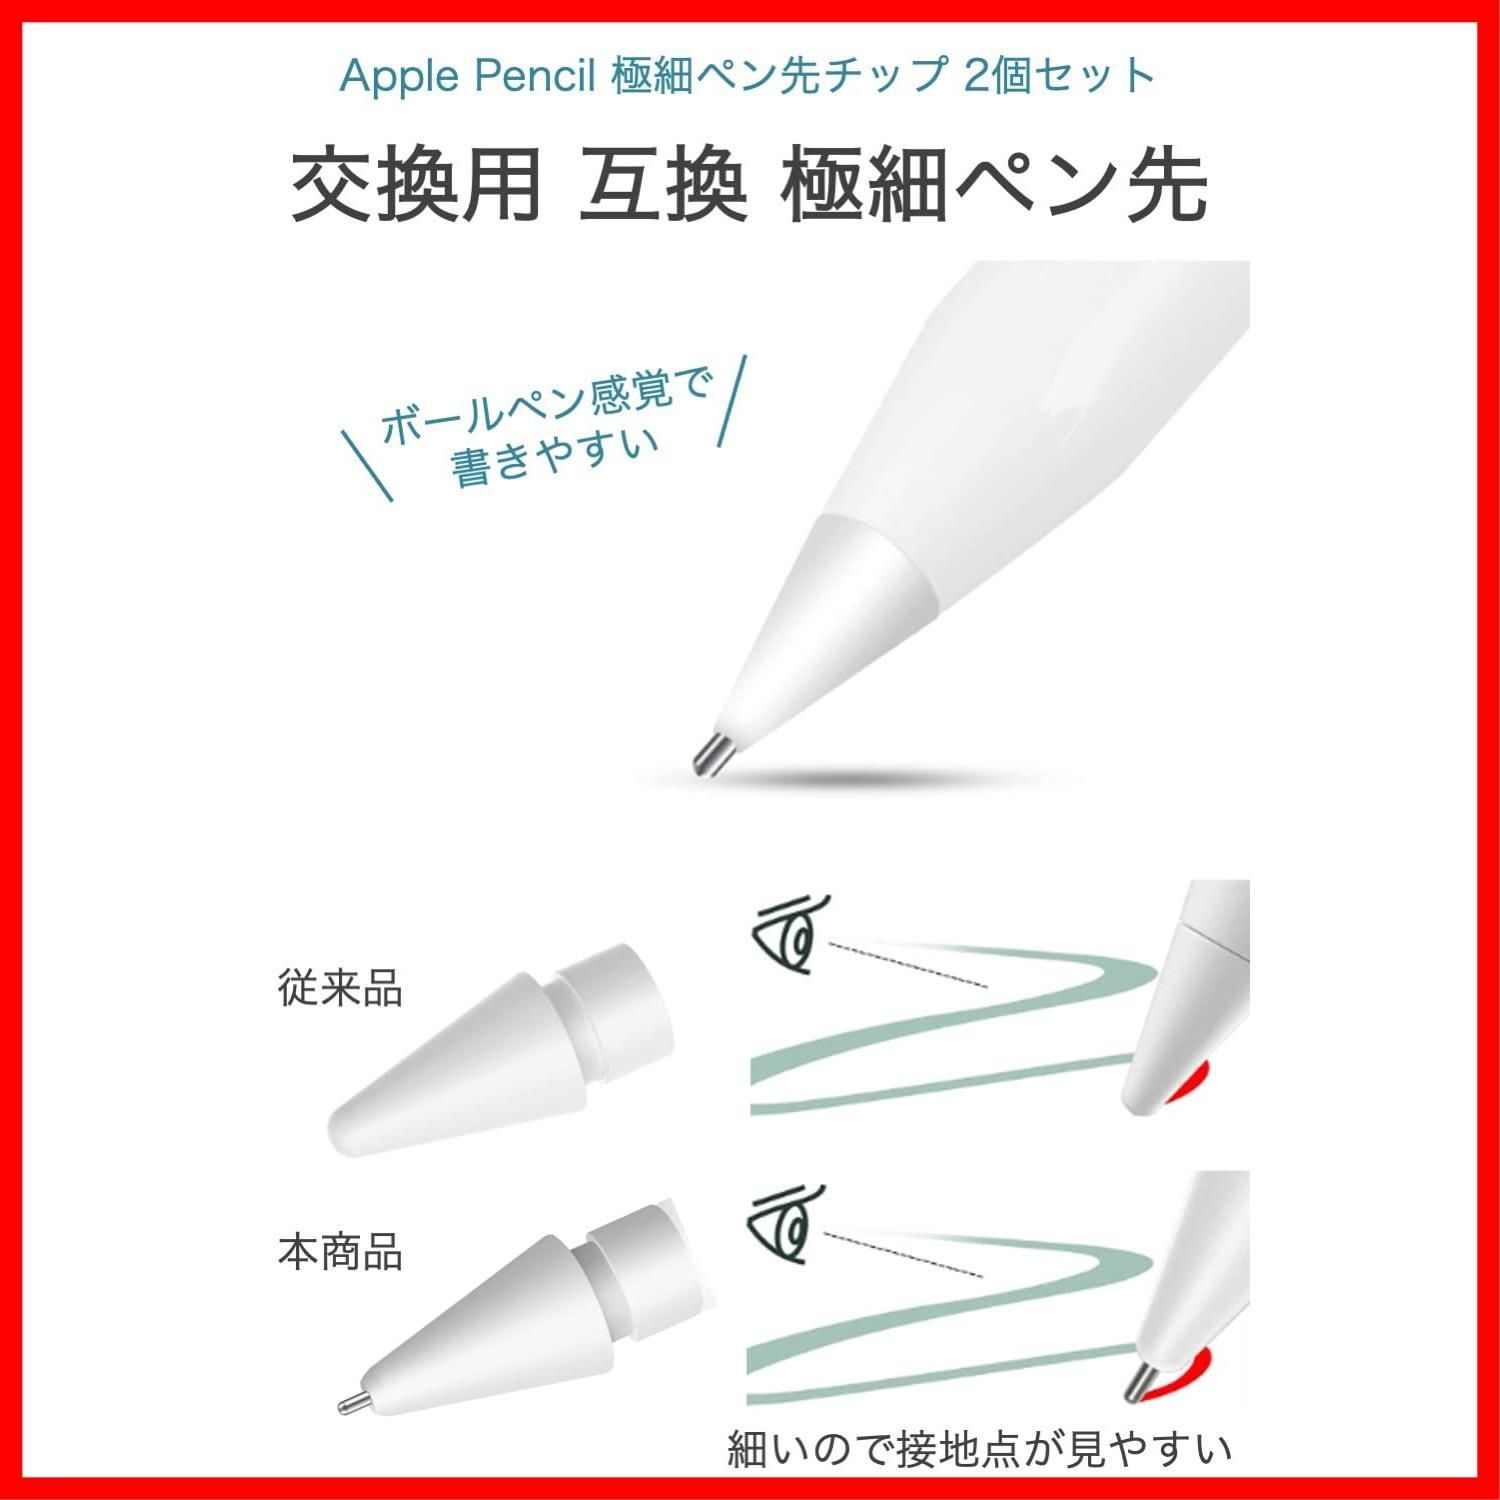 wumio] Apple Pencil 極細 ペン先 2個セット 互換 替え芯 交換 第1世代 ...